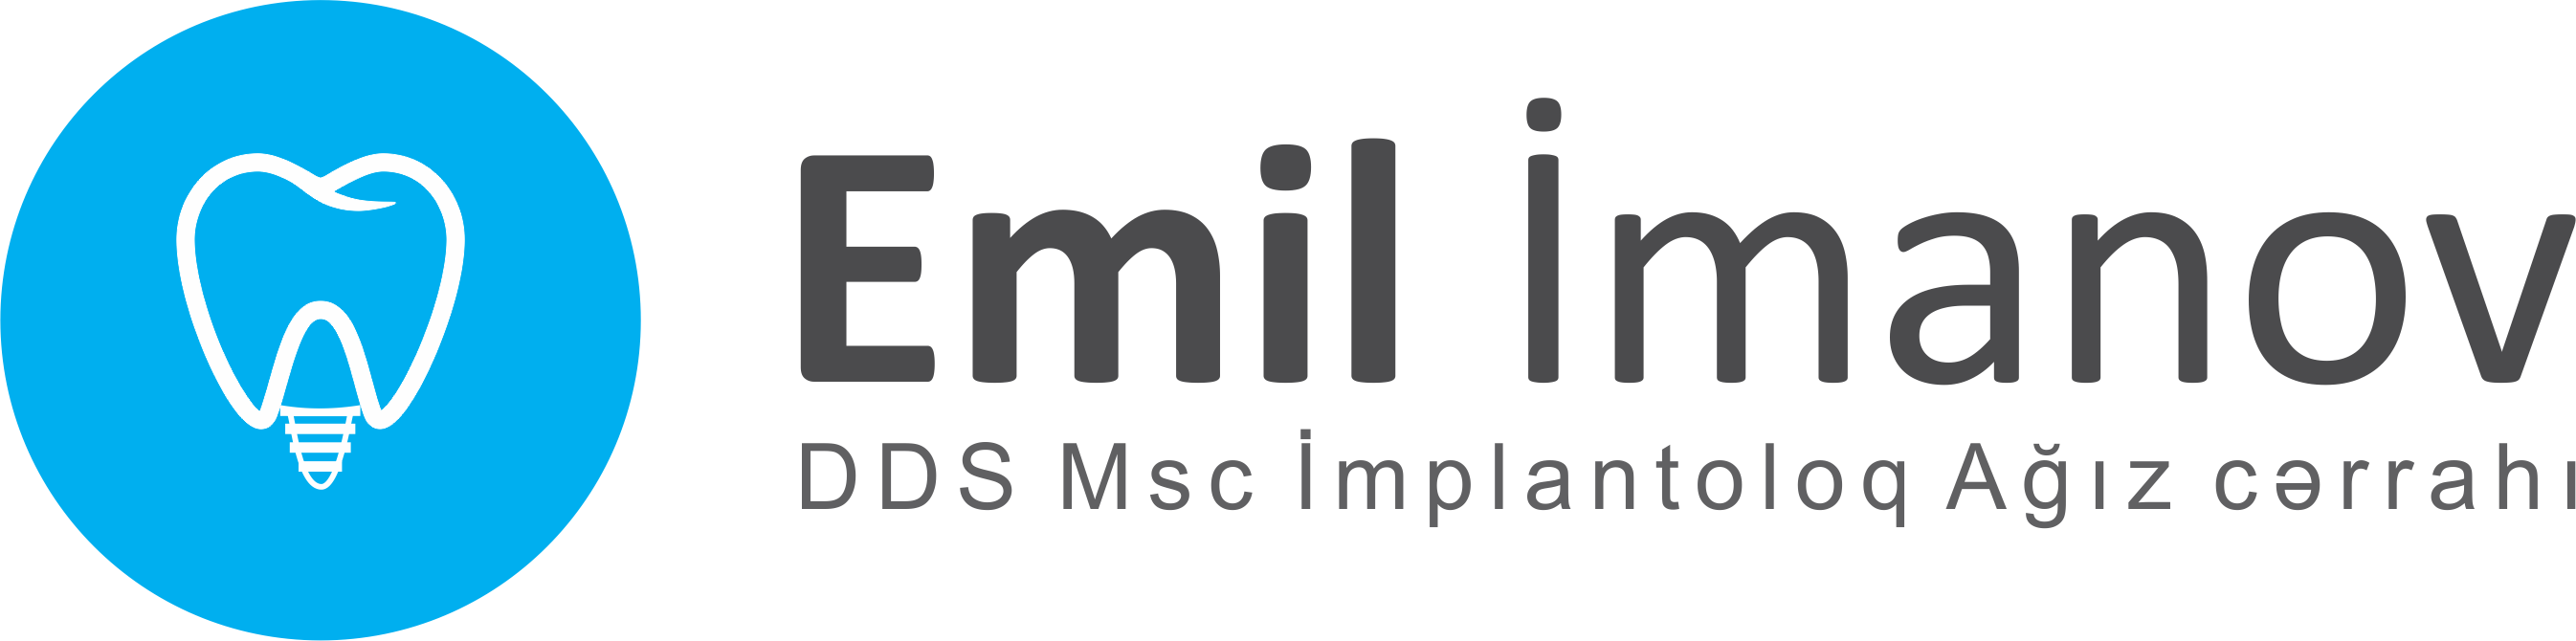 Emil Imanov DDS MSc Implantologist